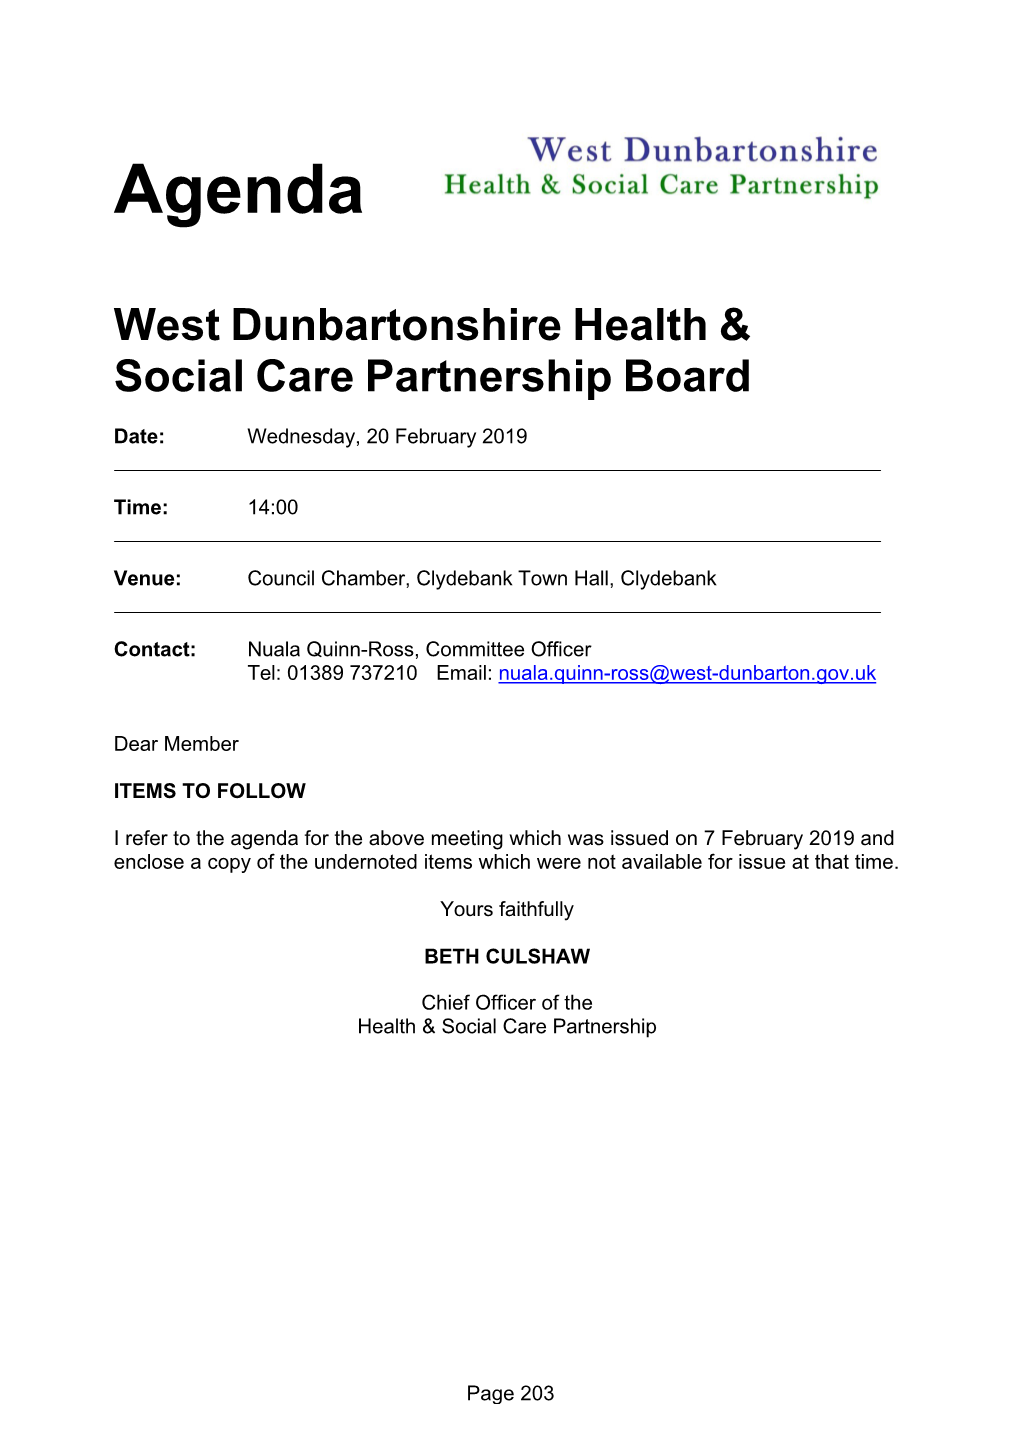 West Dunbartonshire Health & Social Care Partnership Board